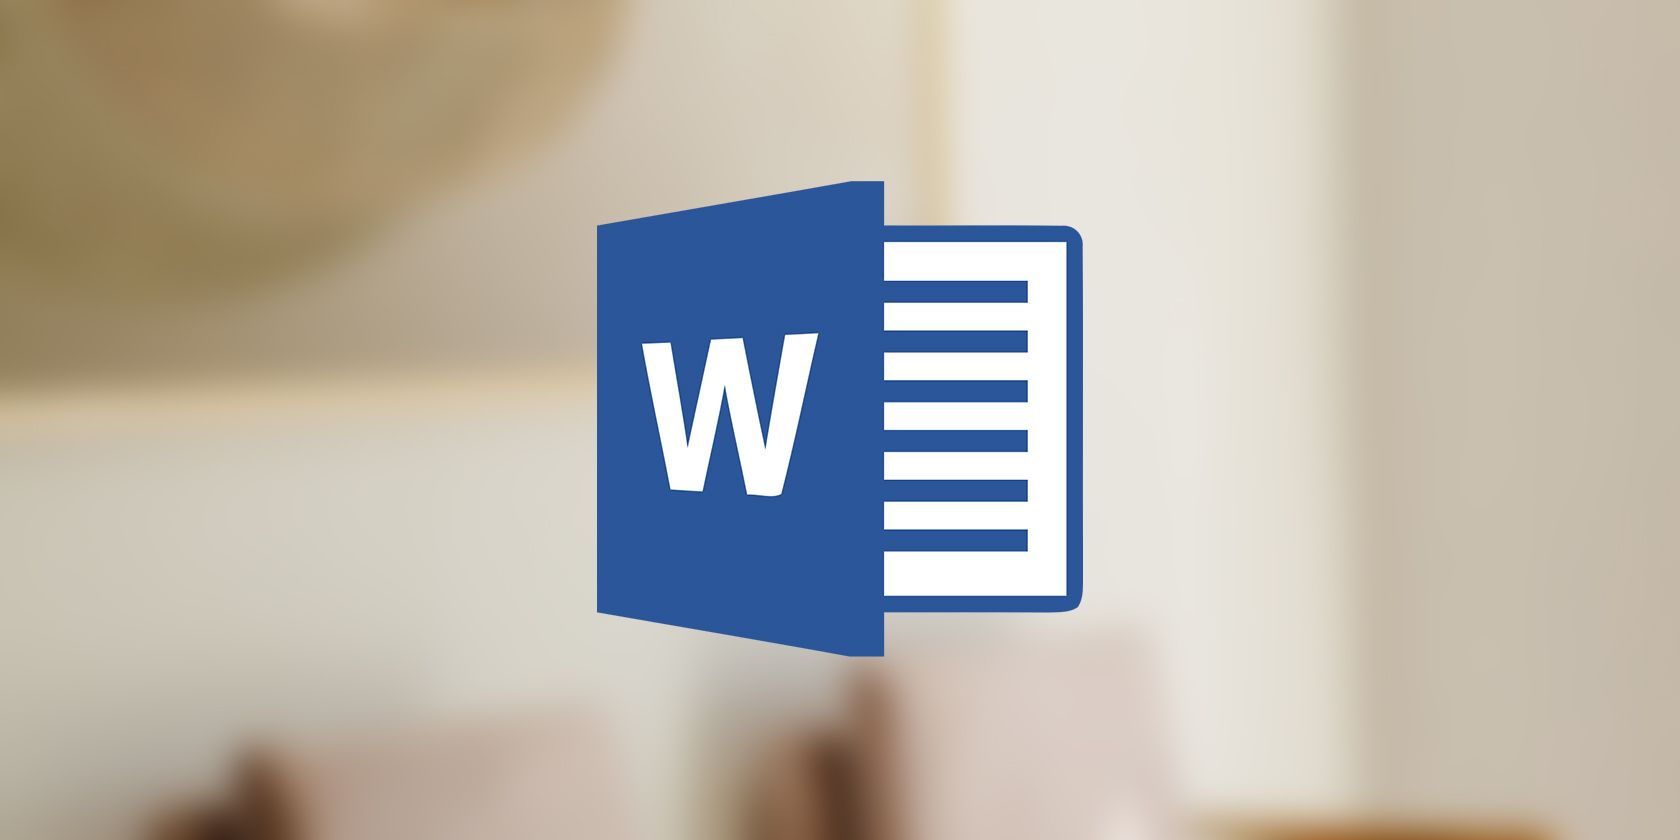 Microsoft word logo on blurred yellow background